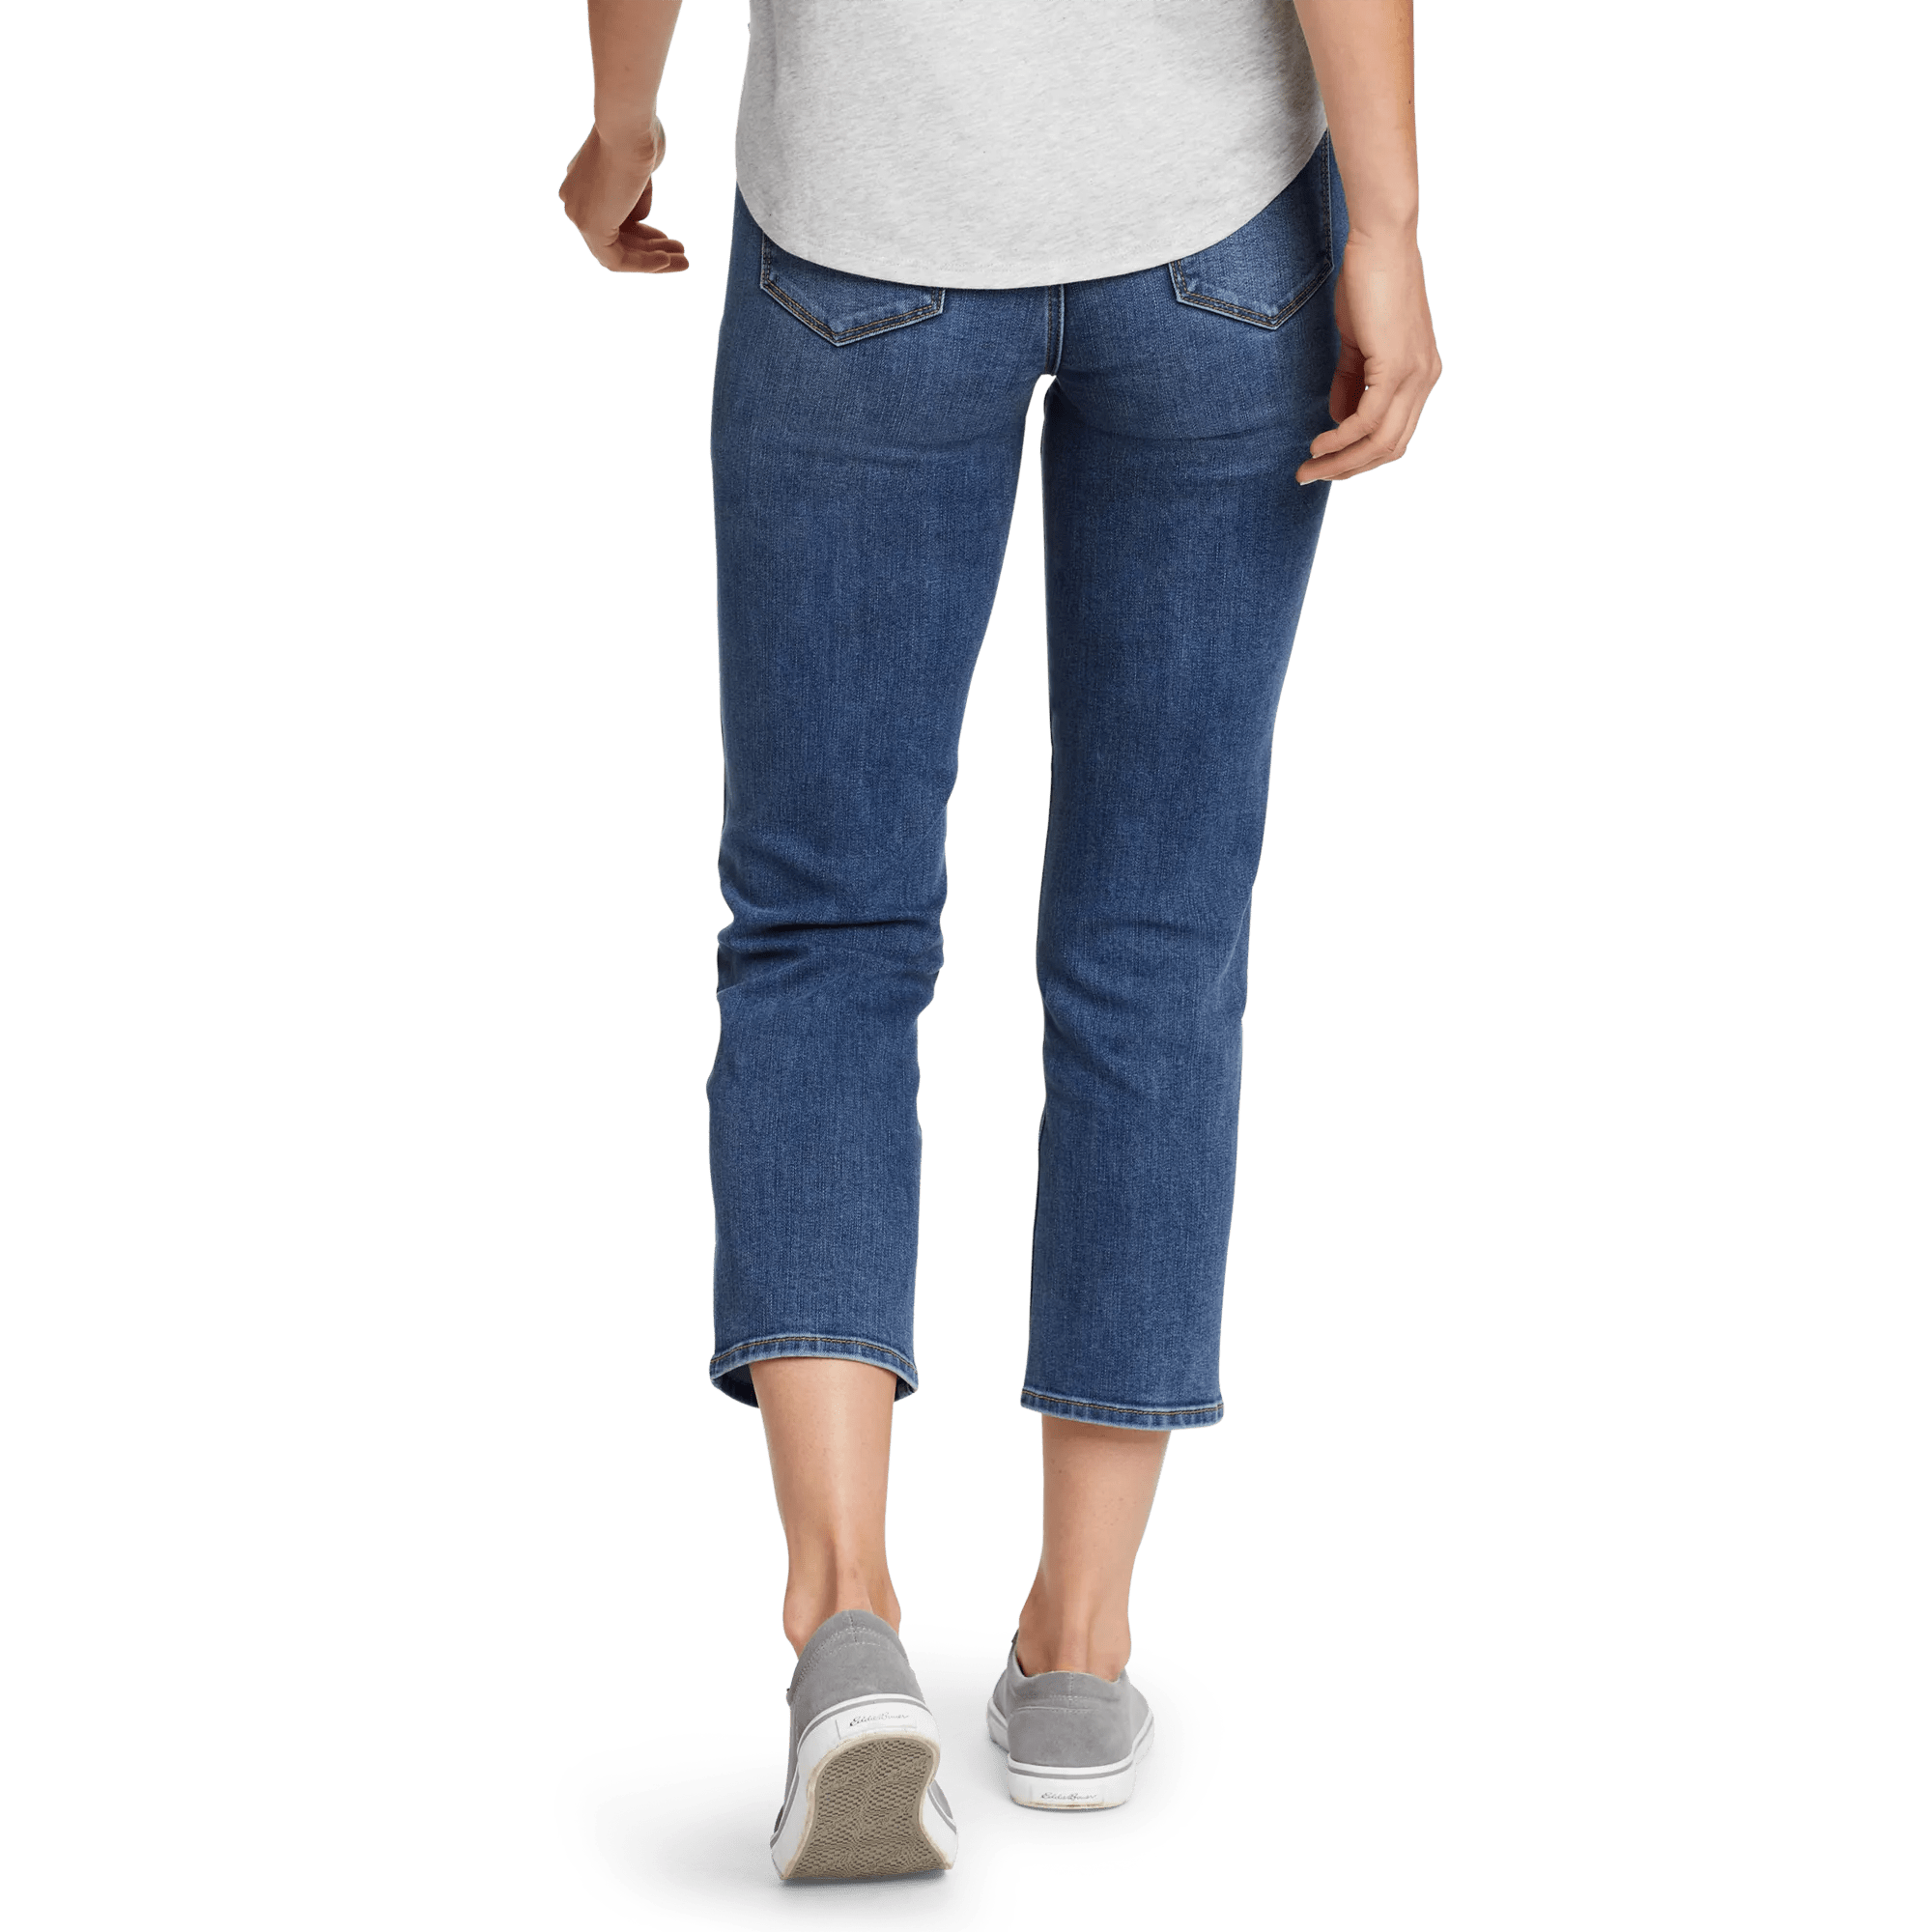 Voyager Crop Jeans